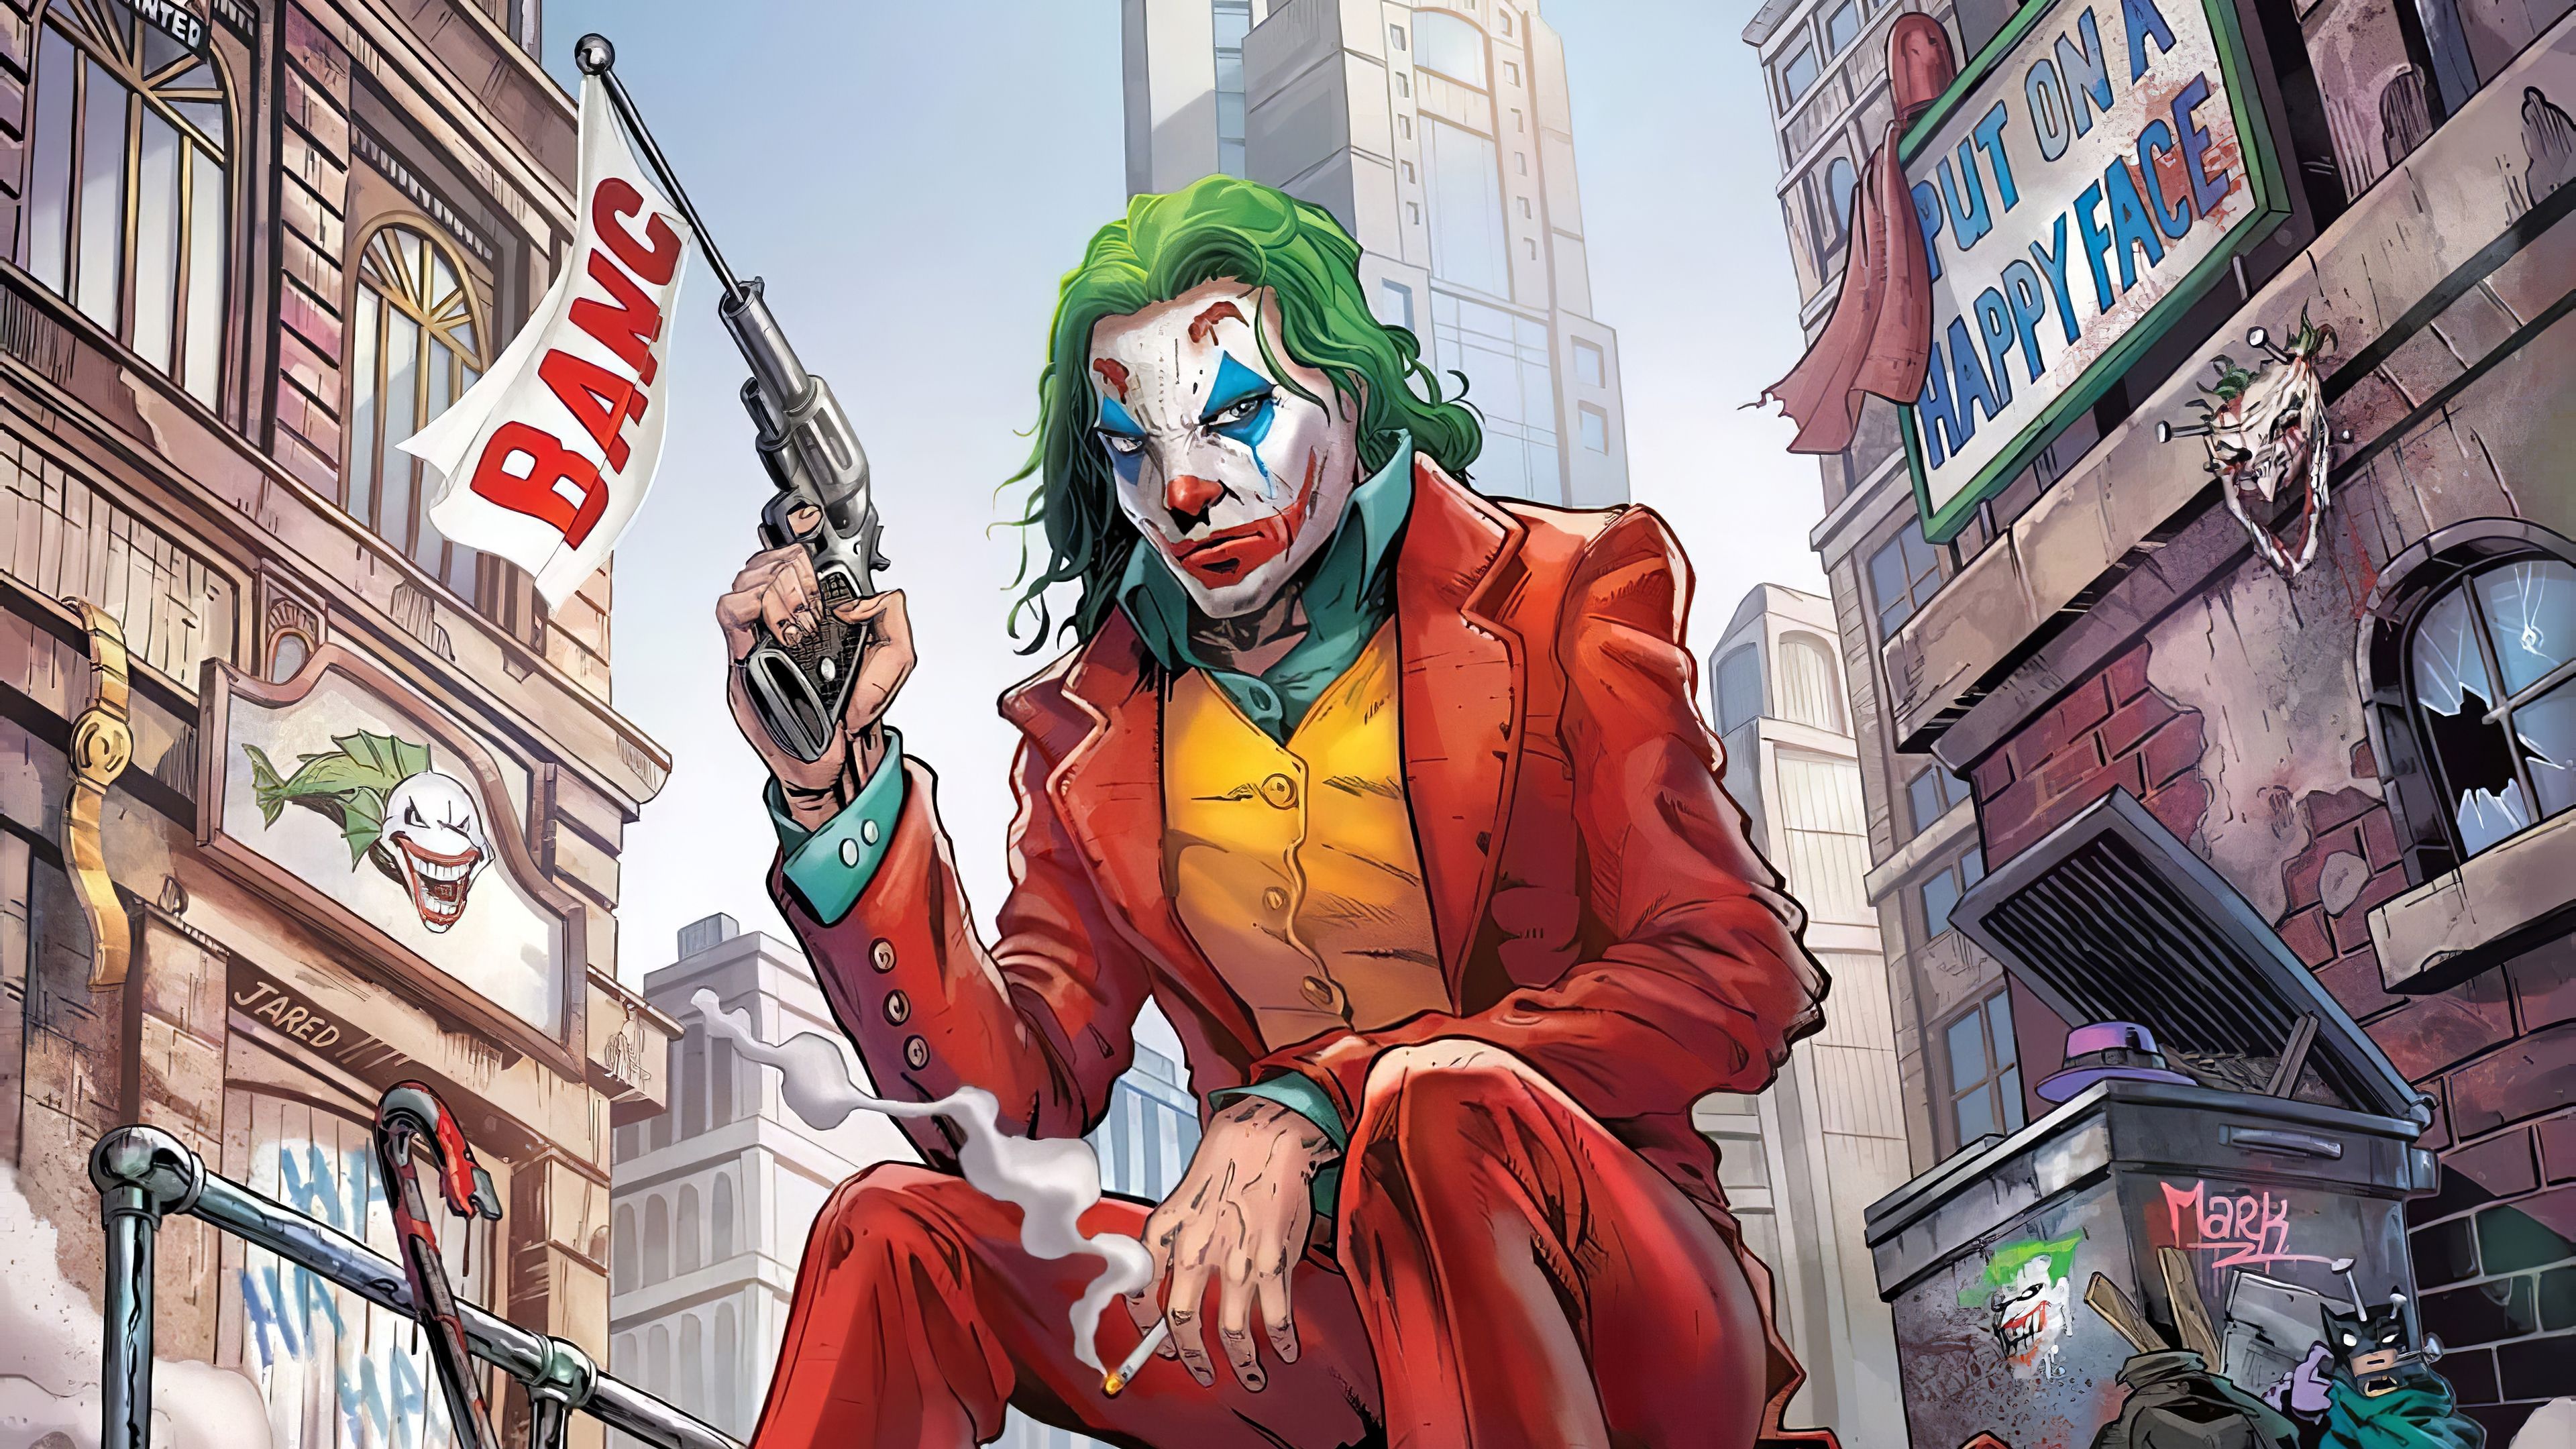 Joker Comic 4K Wallpaper, HD Superheroes 4K Wallpaper, Image, Photo and Background